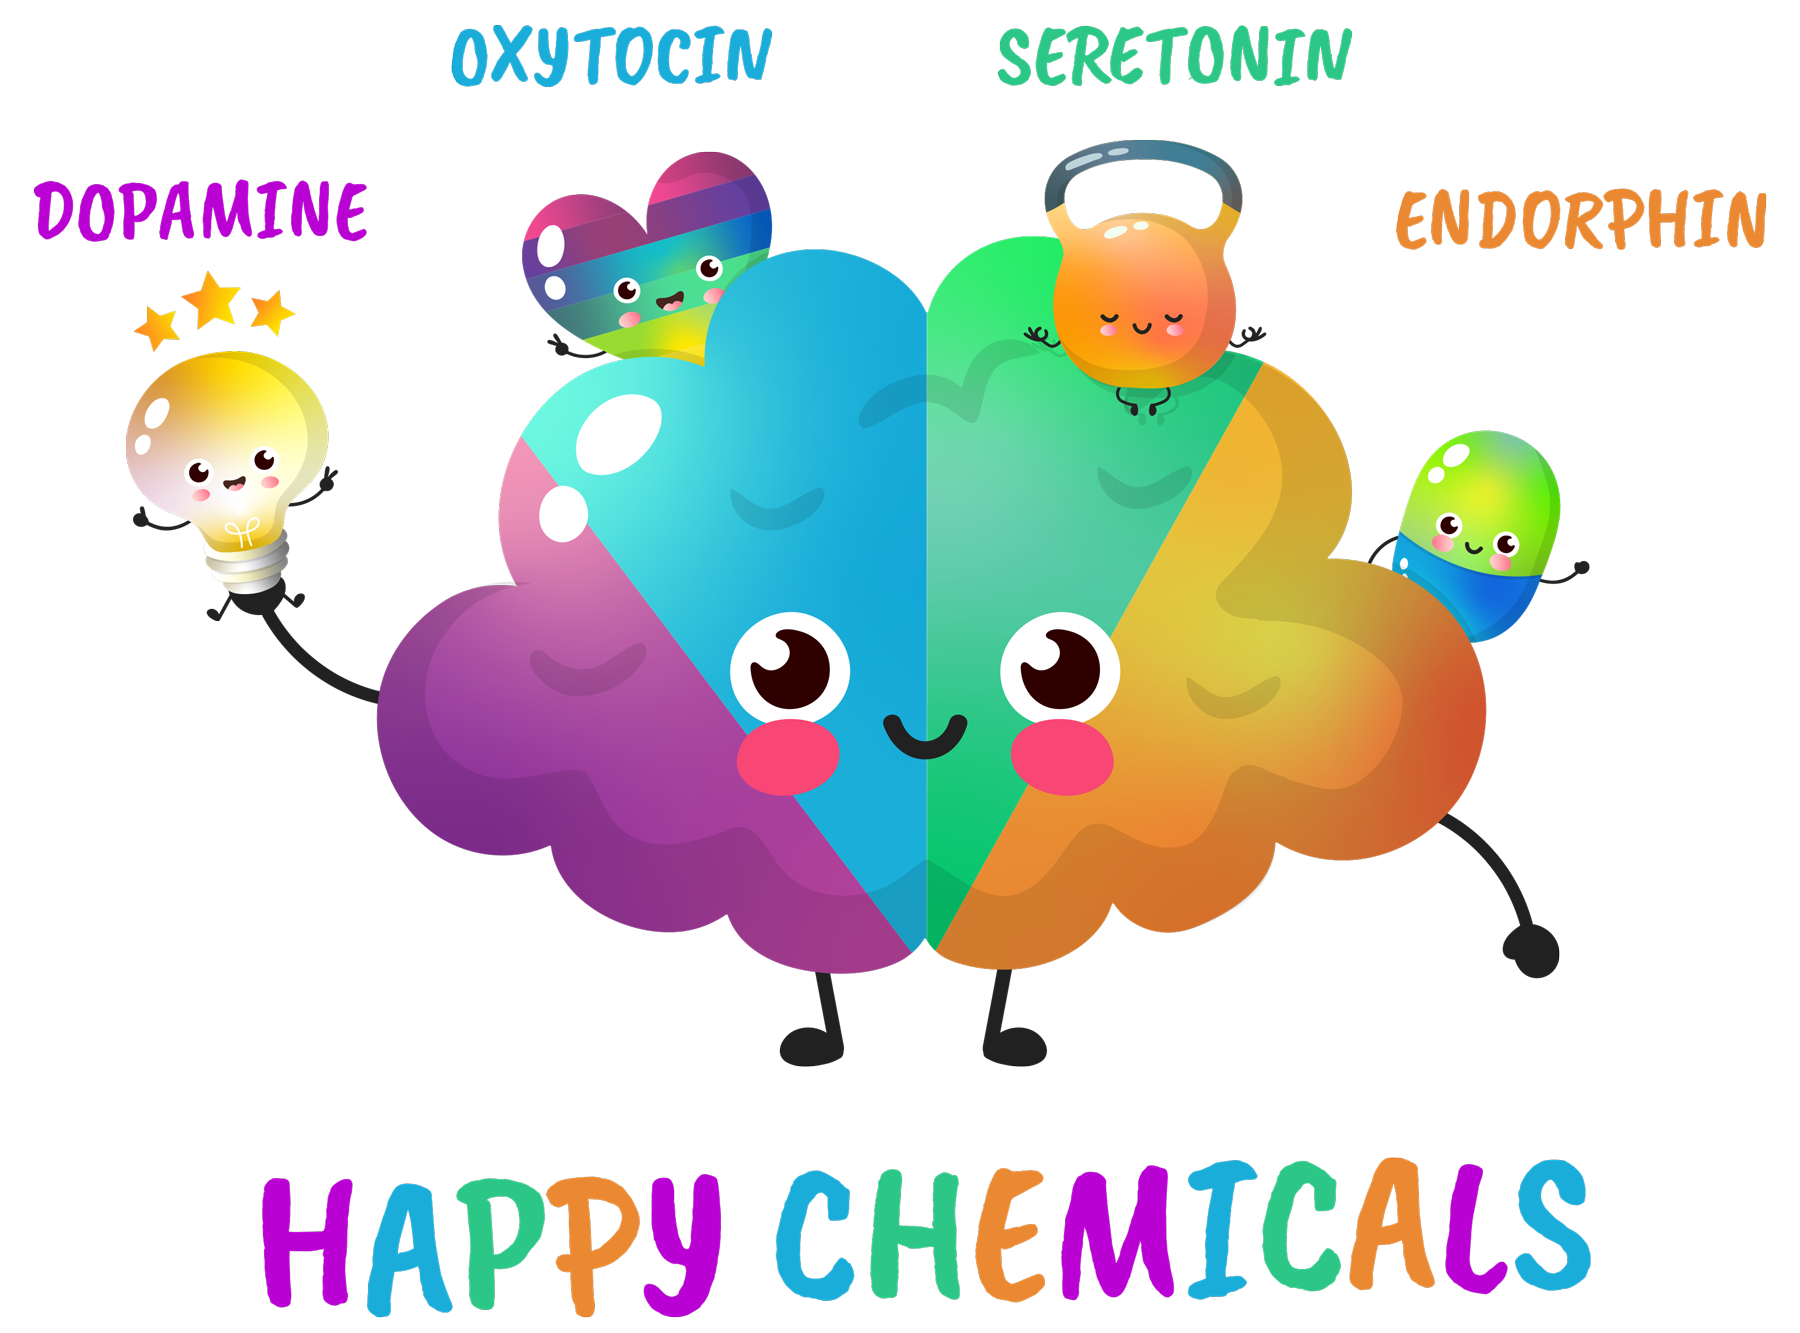 dopamine, oxytocin, seretonin, endorphhin, happy chemicals